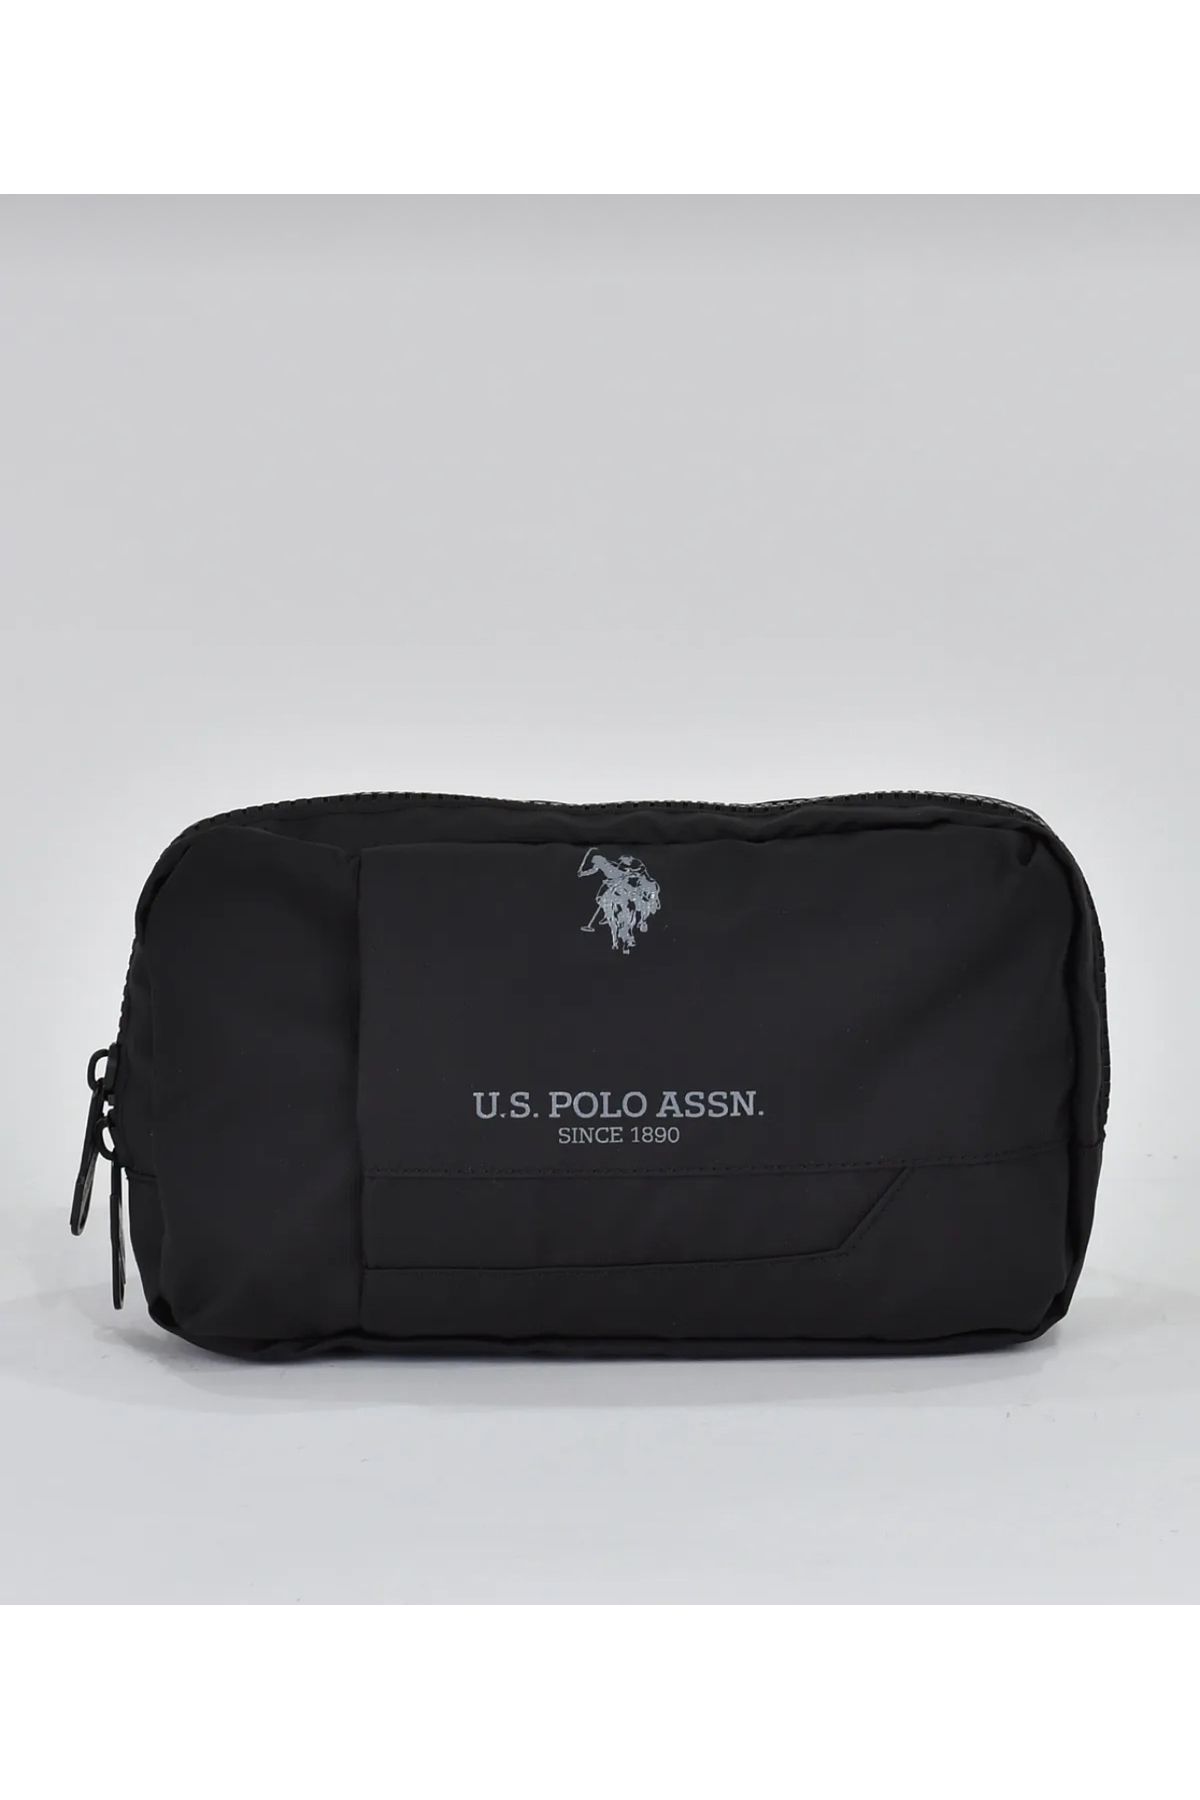 U.S. Polo Assn. U.S. Polo Assn Bel Çantası